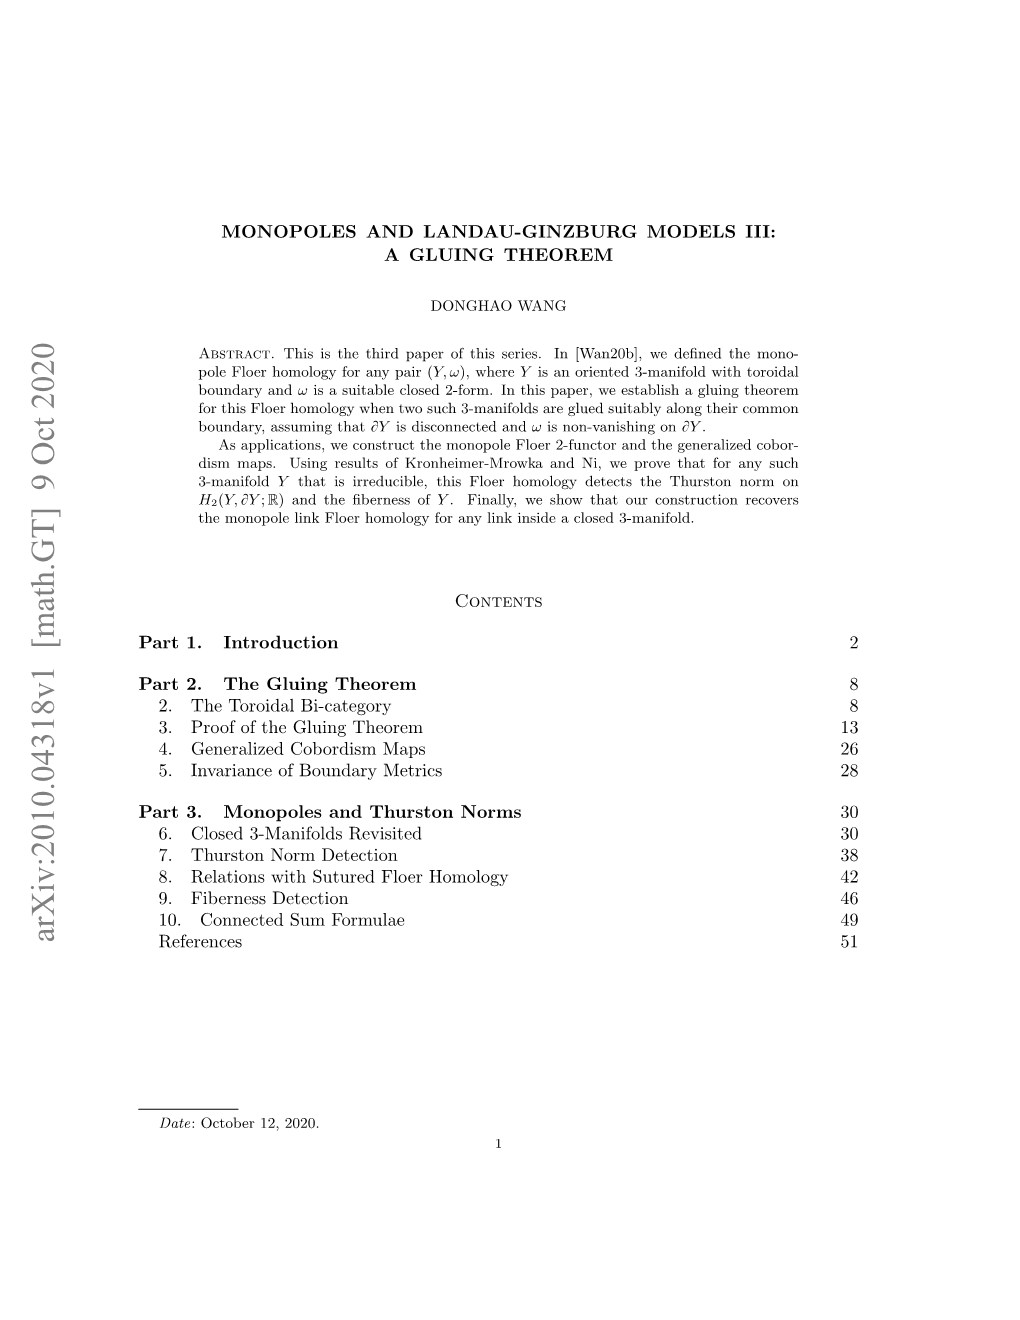 Monopoles and Landau-Ginzburg Models Iii: a Gluing Theorem